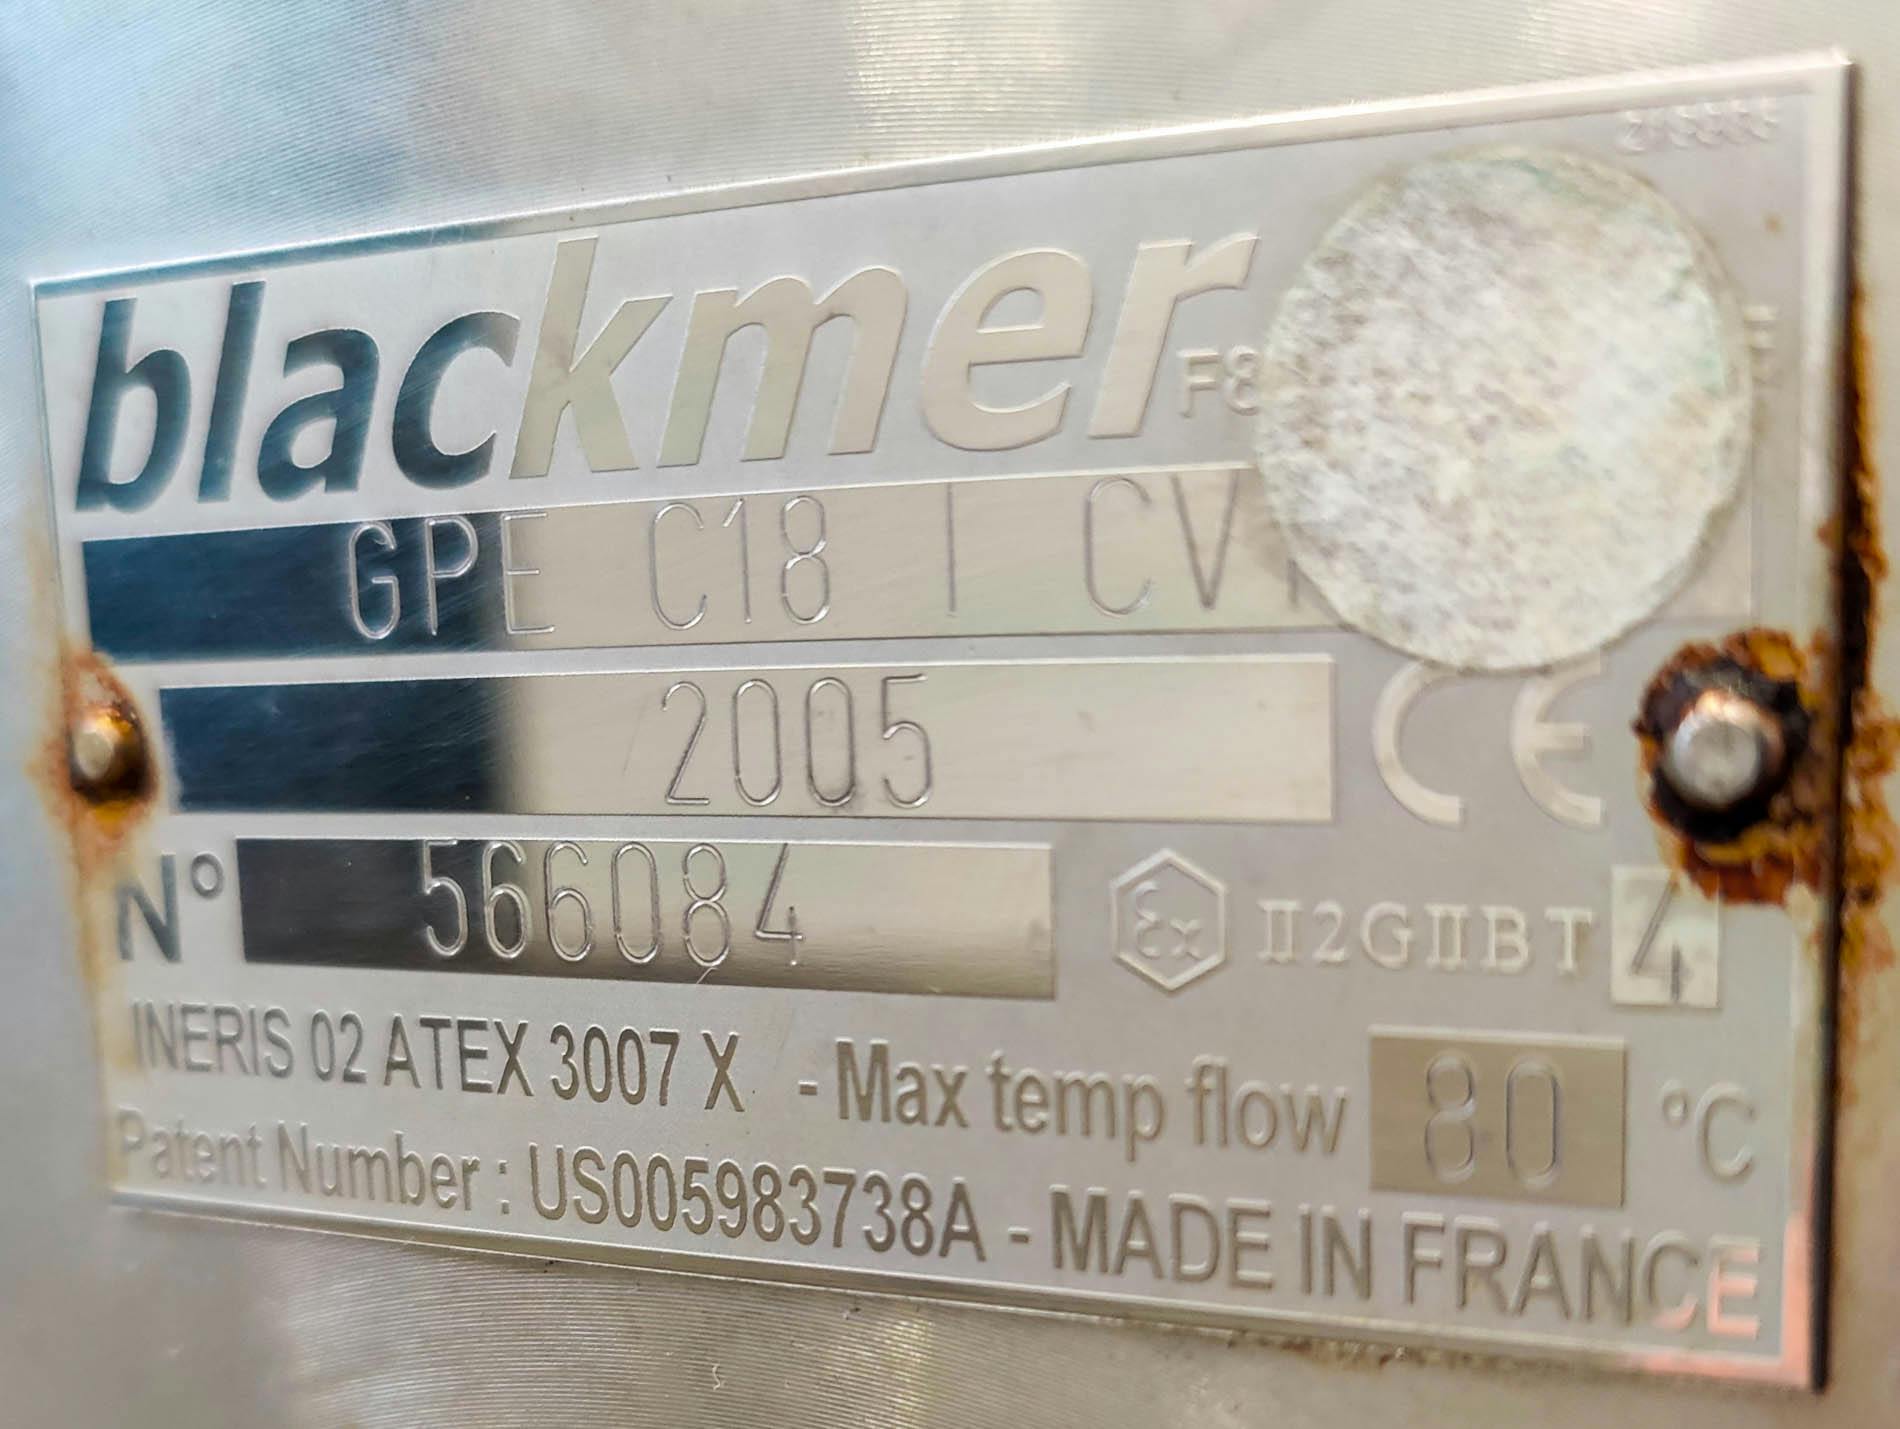 Blackmer GPI C18 I CV - Pompe à vis excentrique - image 11